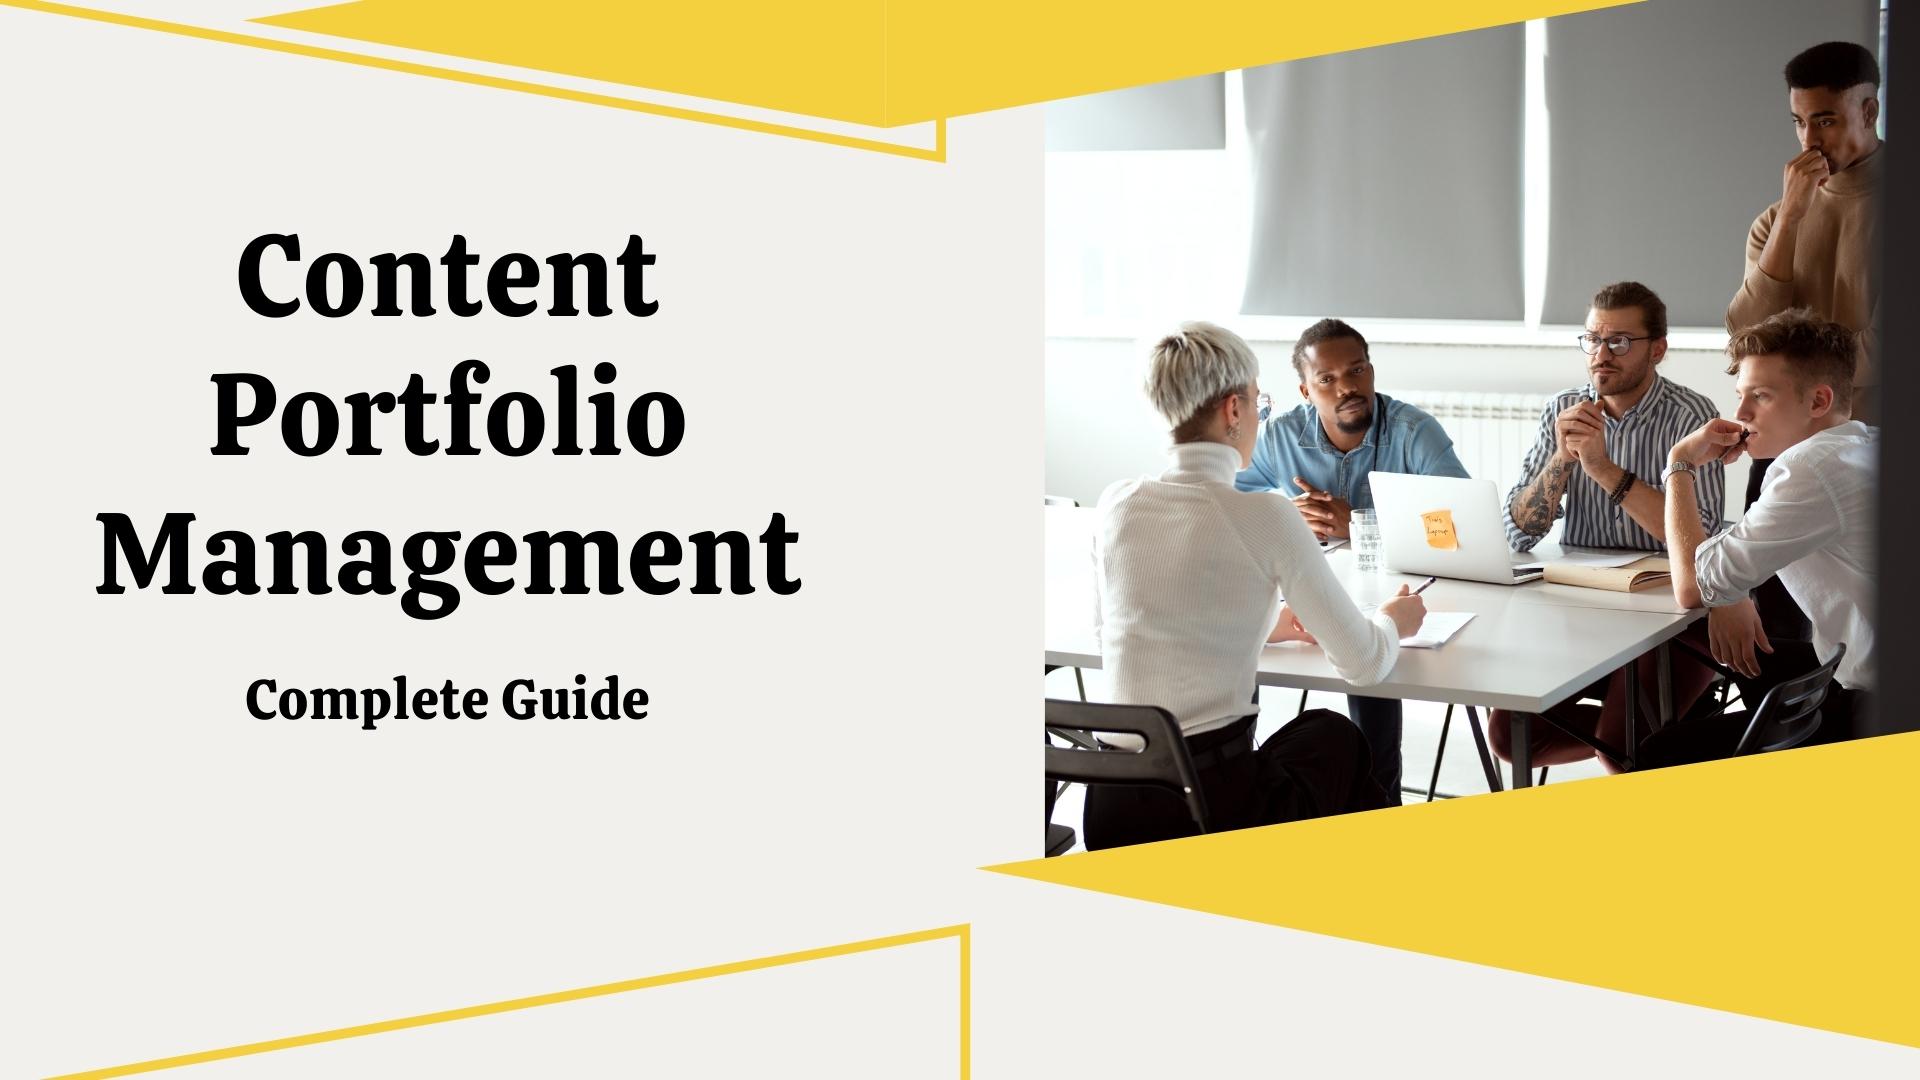 Content portfolio management - Complete guide